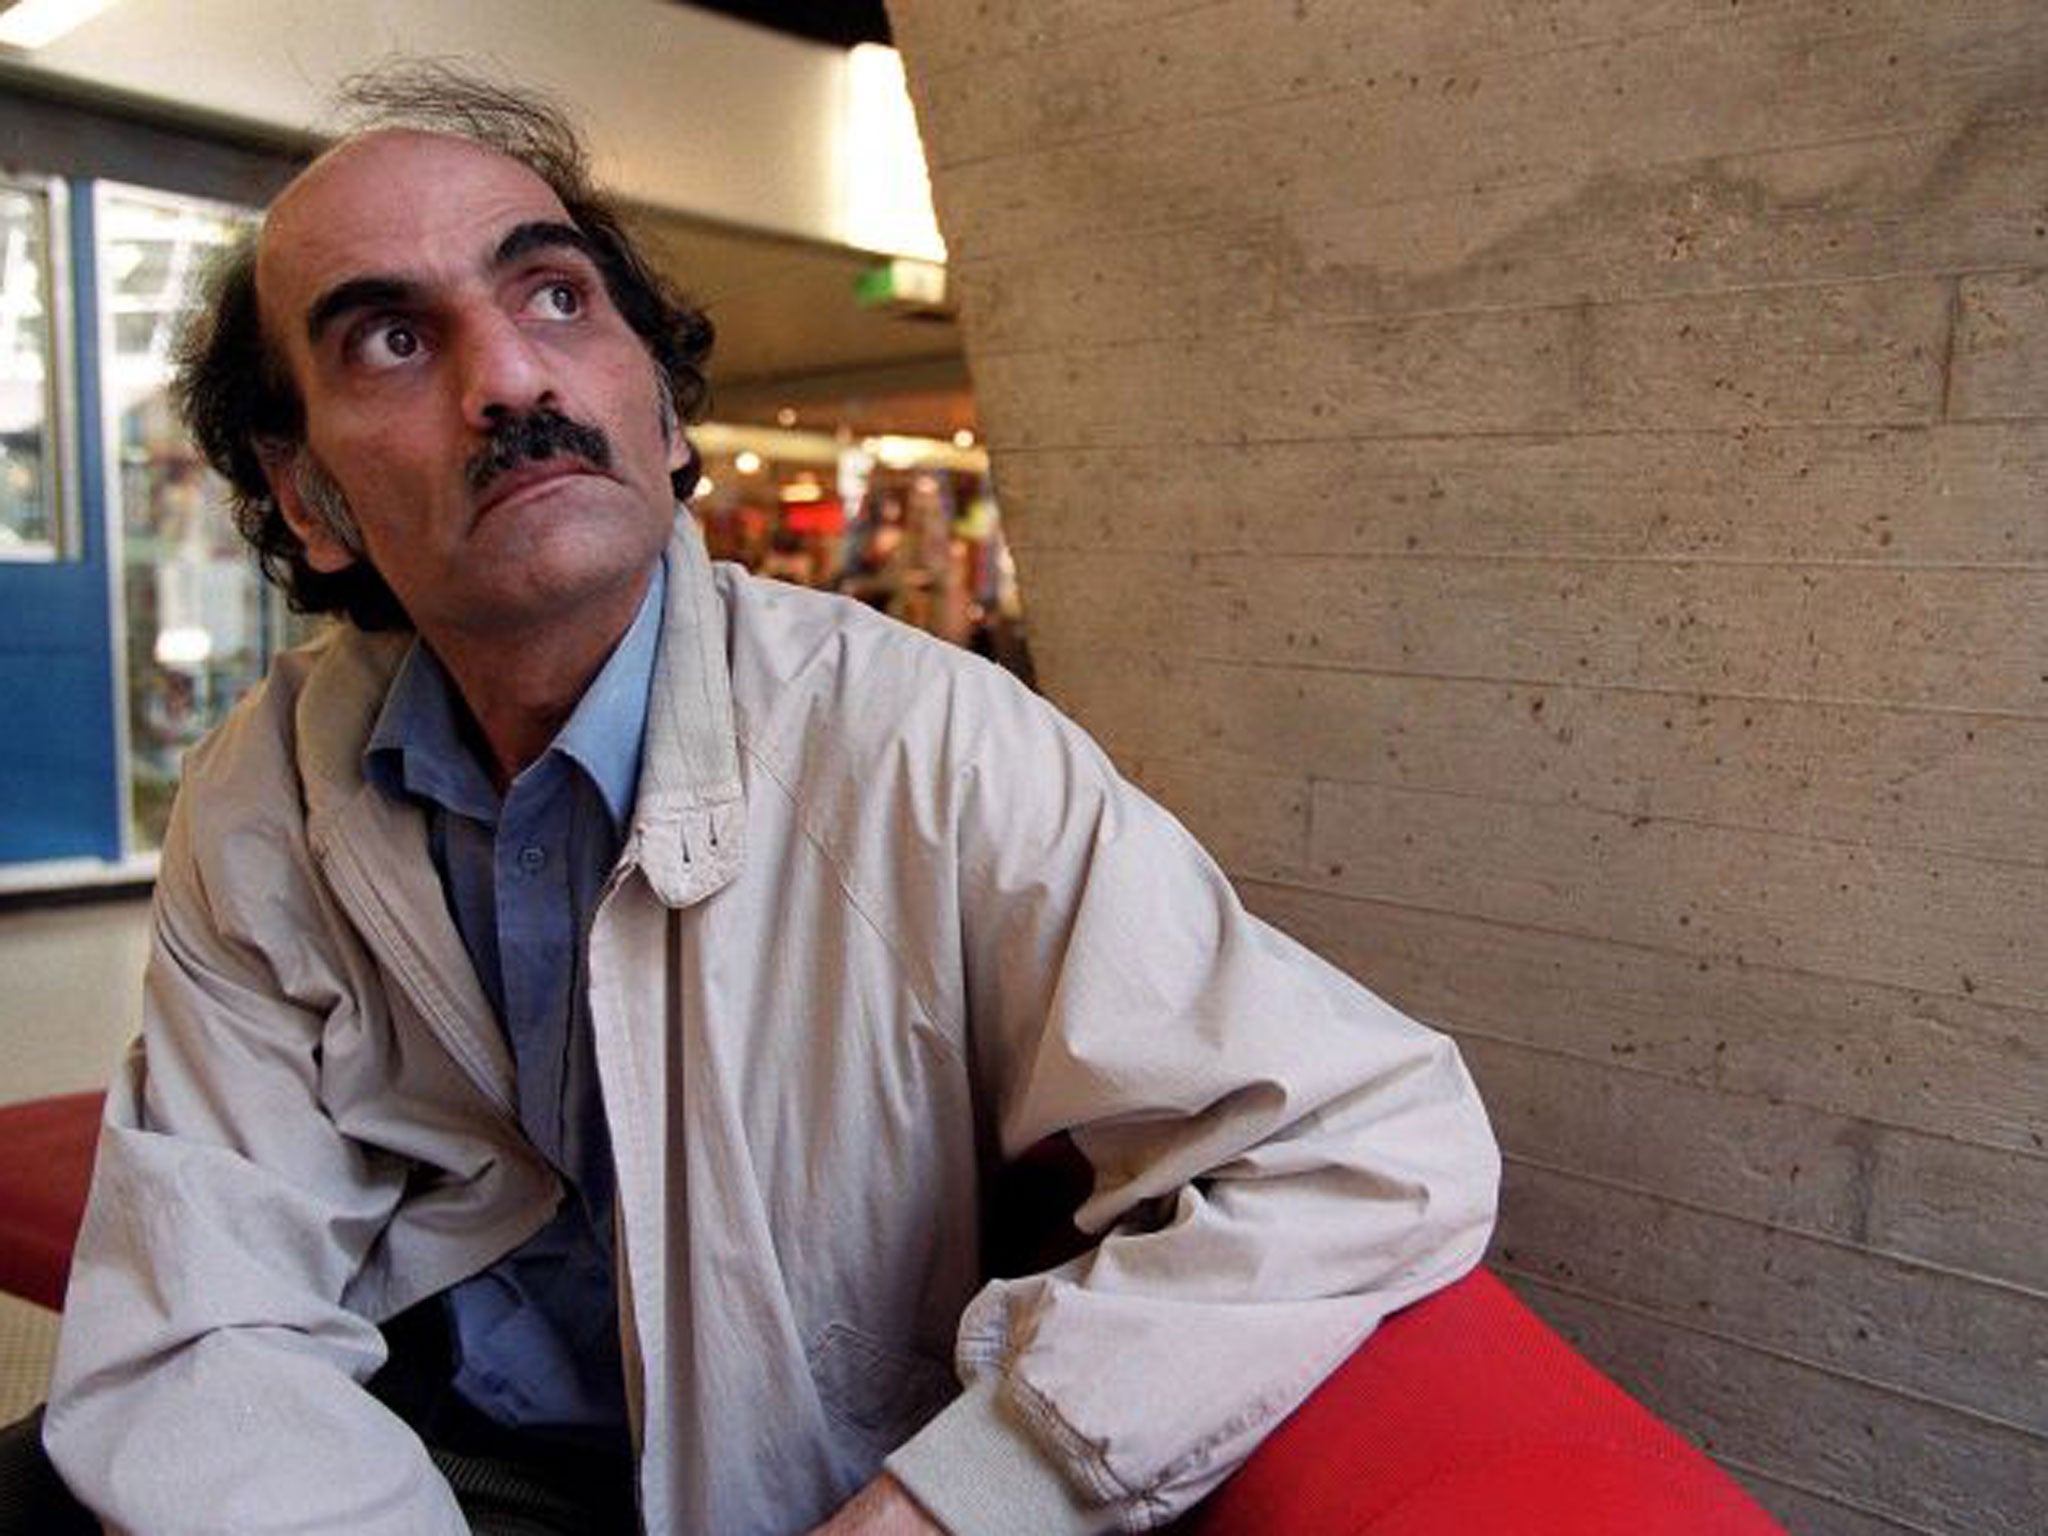 Mehran Karimi Nasseri: He managed to spend 18 years at Terminal 1 of Paris’s Charles de Gaulle airport